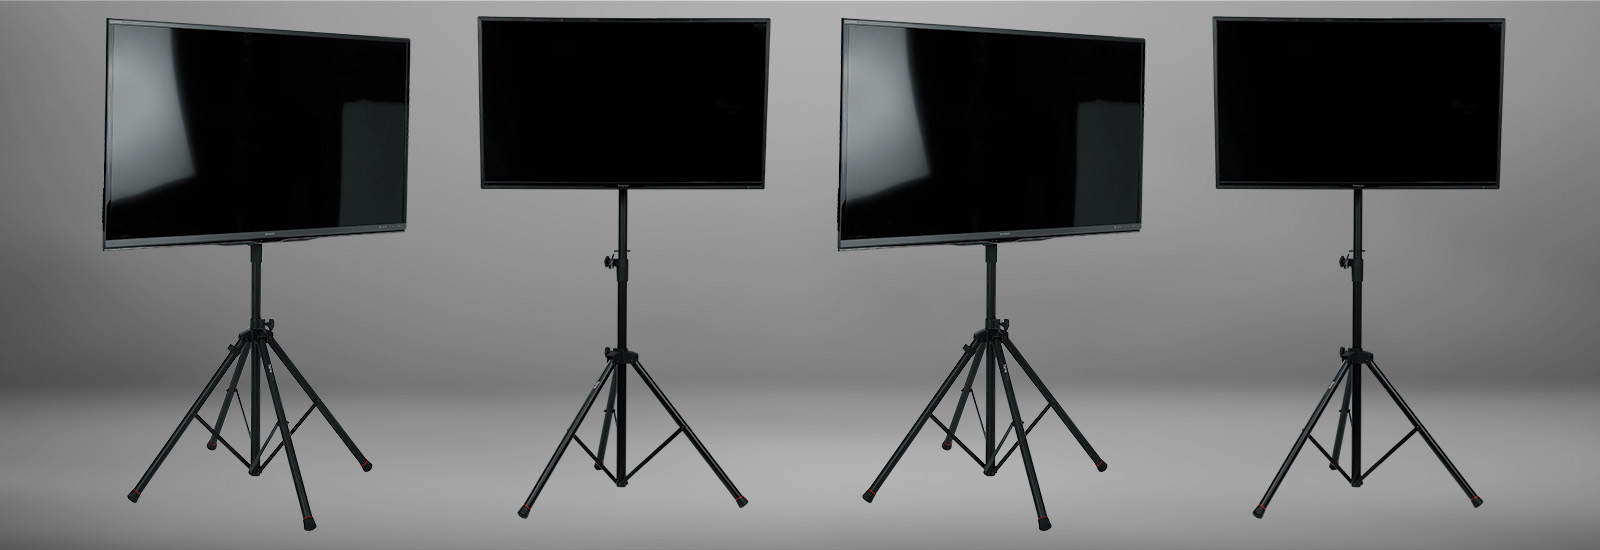 TV & Video Display Stands